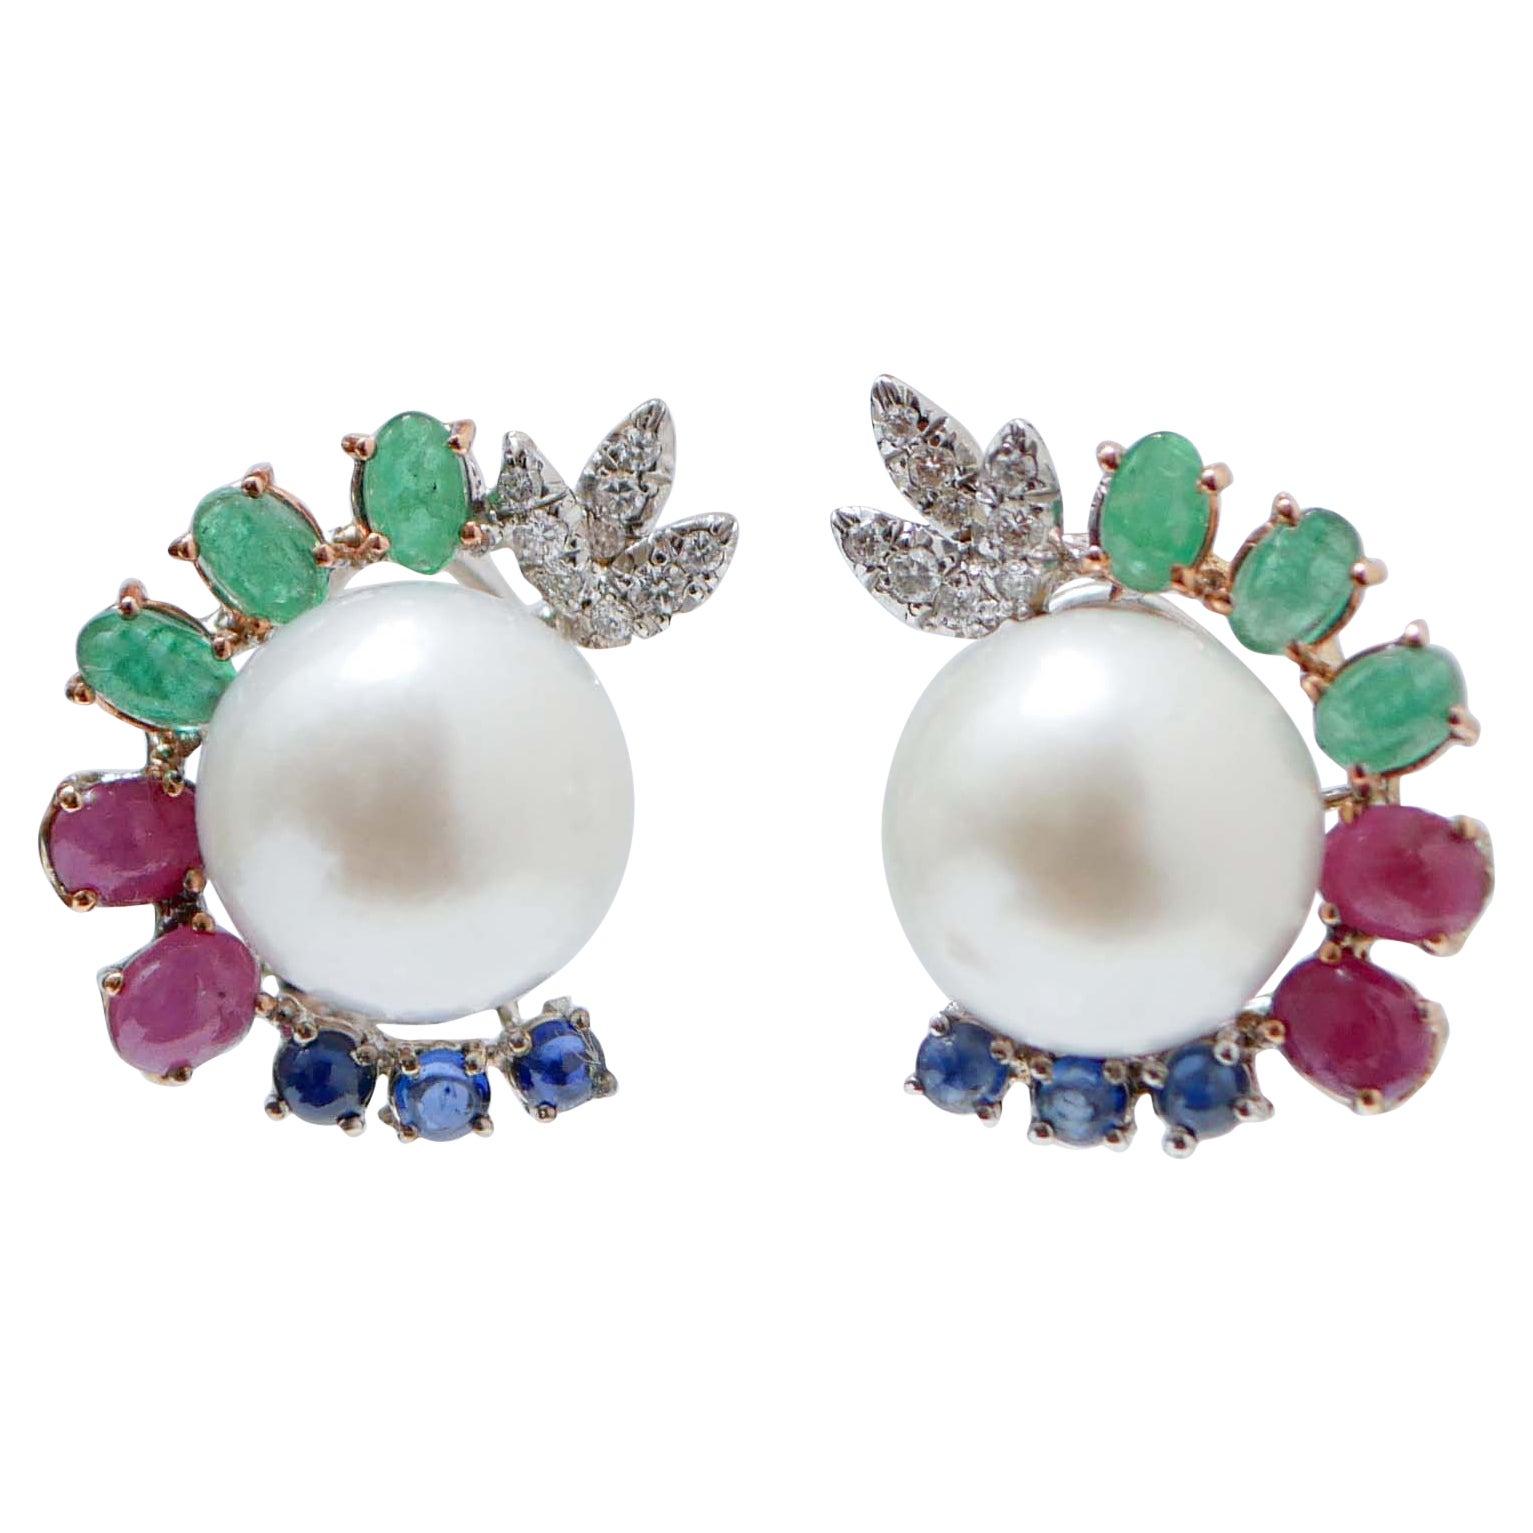 South-Sea Pearls, Emeralds, Rubies, Sapphires, Diamonds, 18 Kt Gold Earrings.